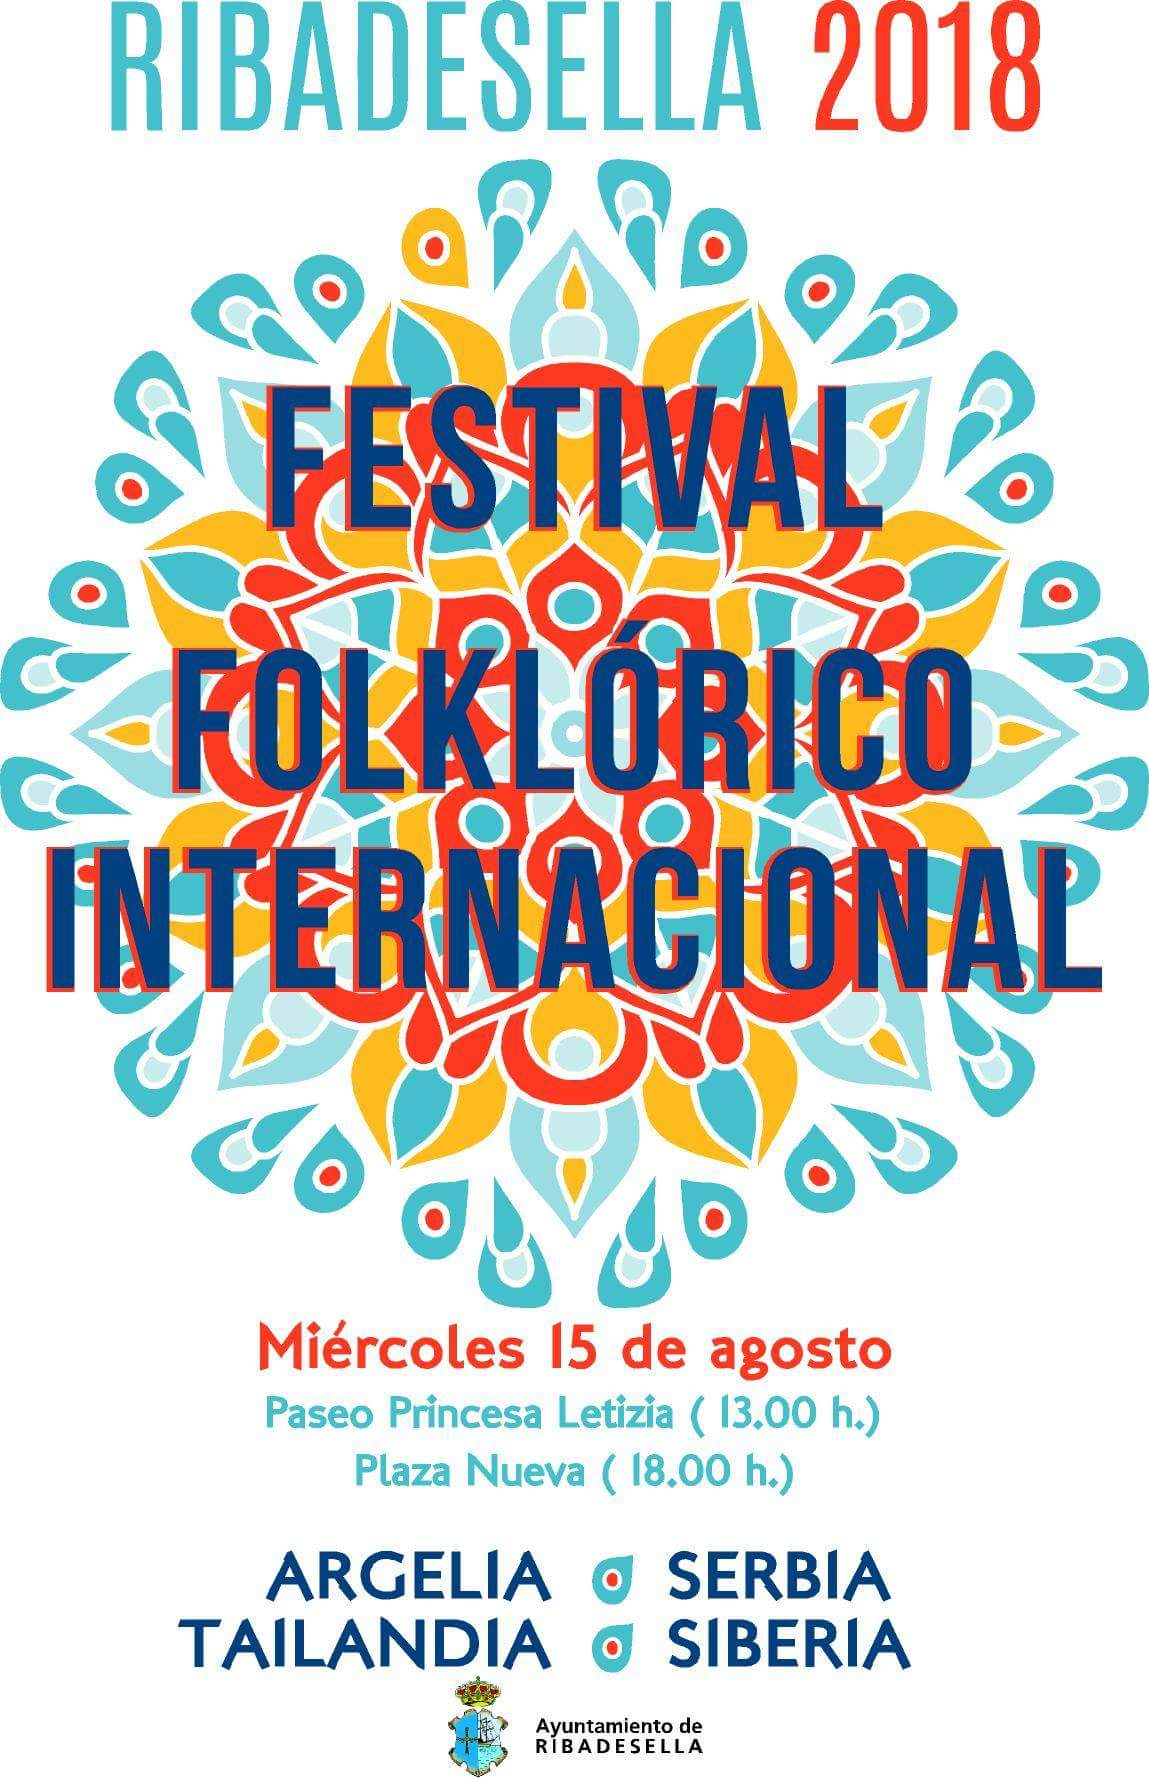 Festival folklórico internacional 2018 - Ribadesella